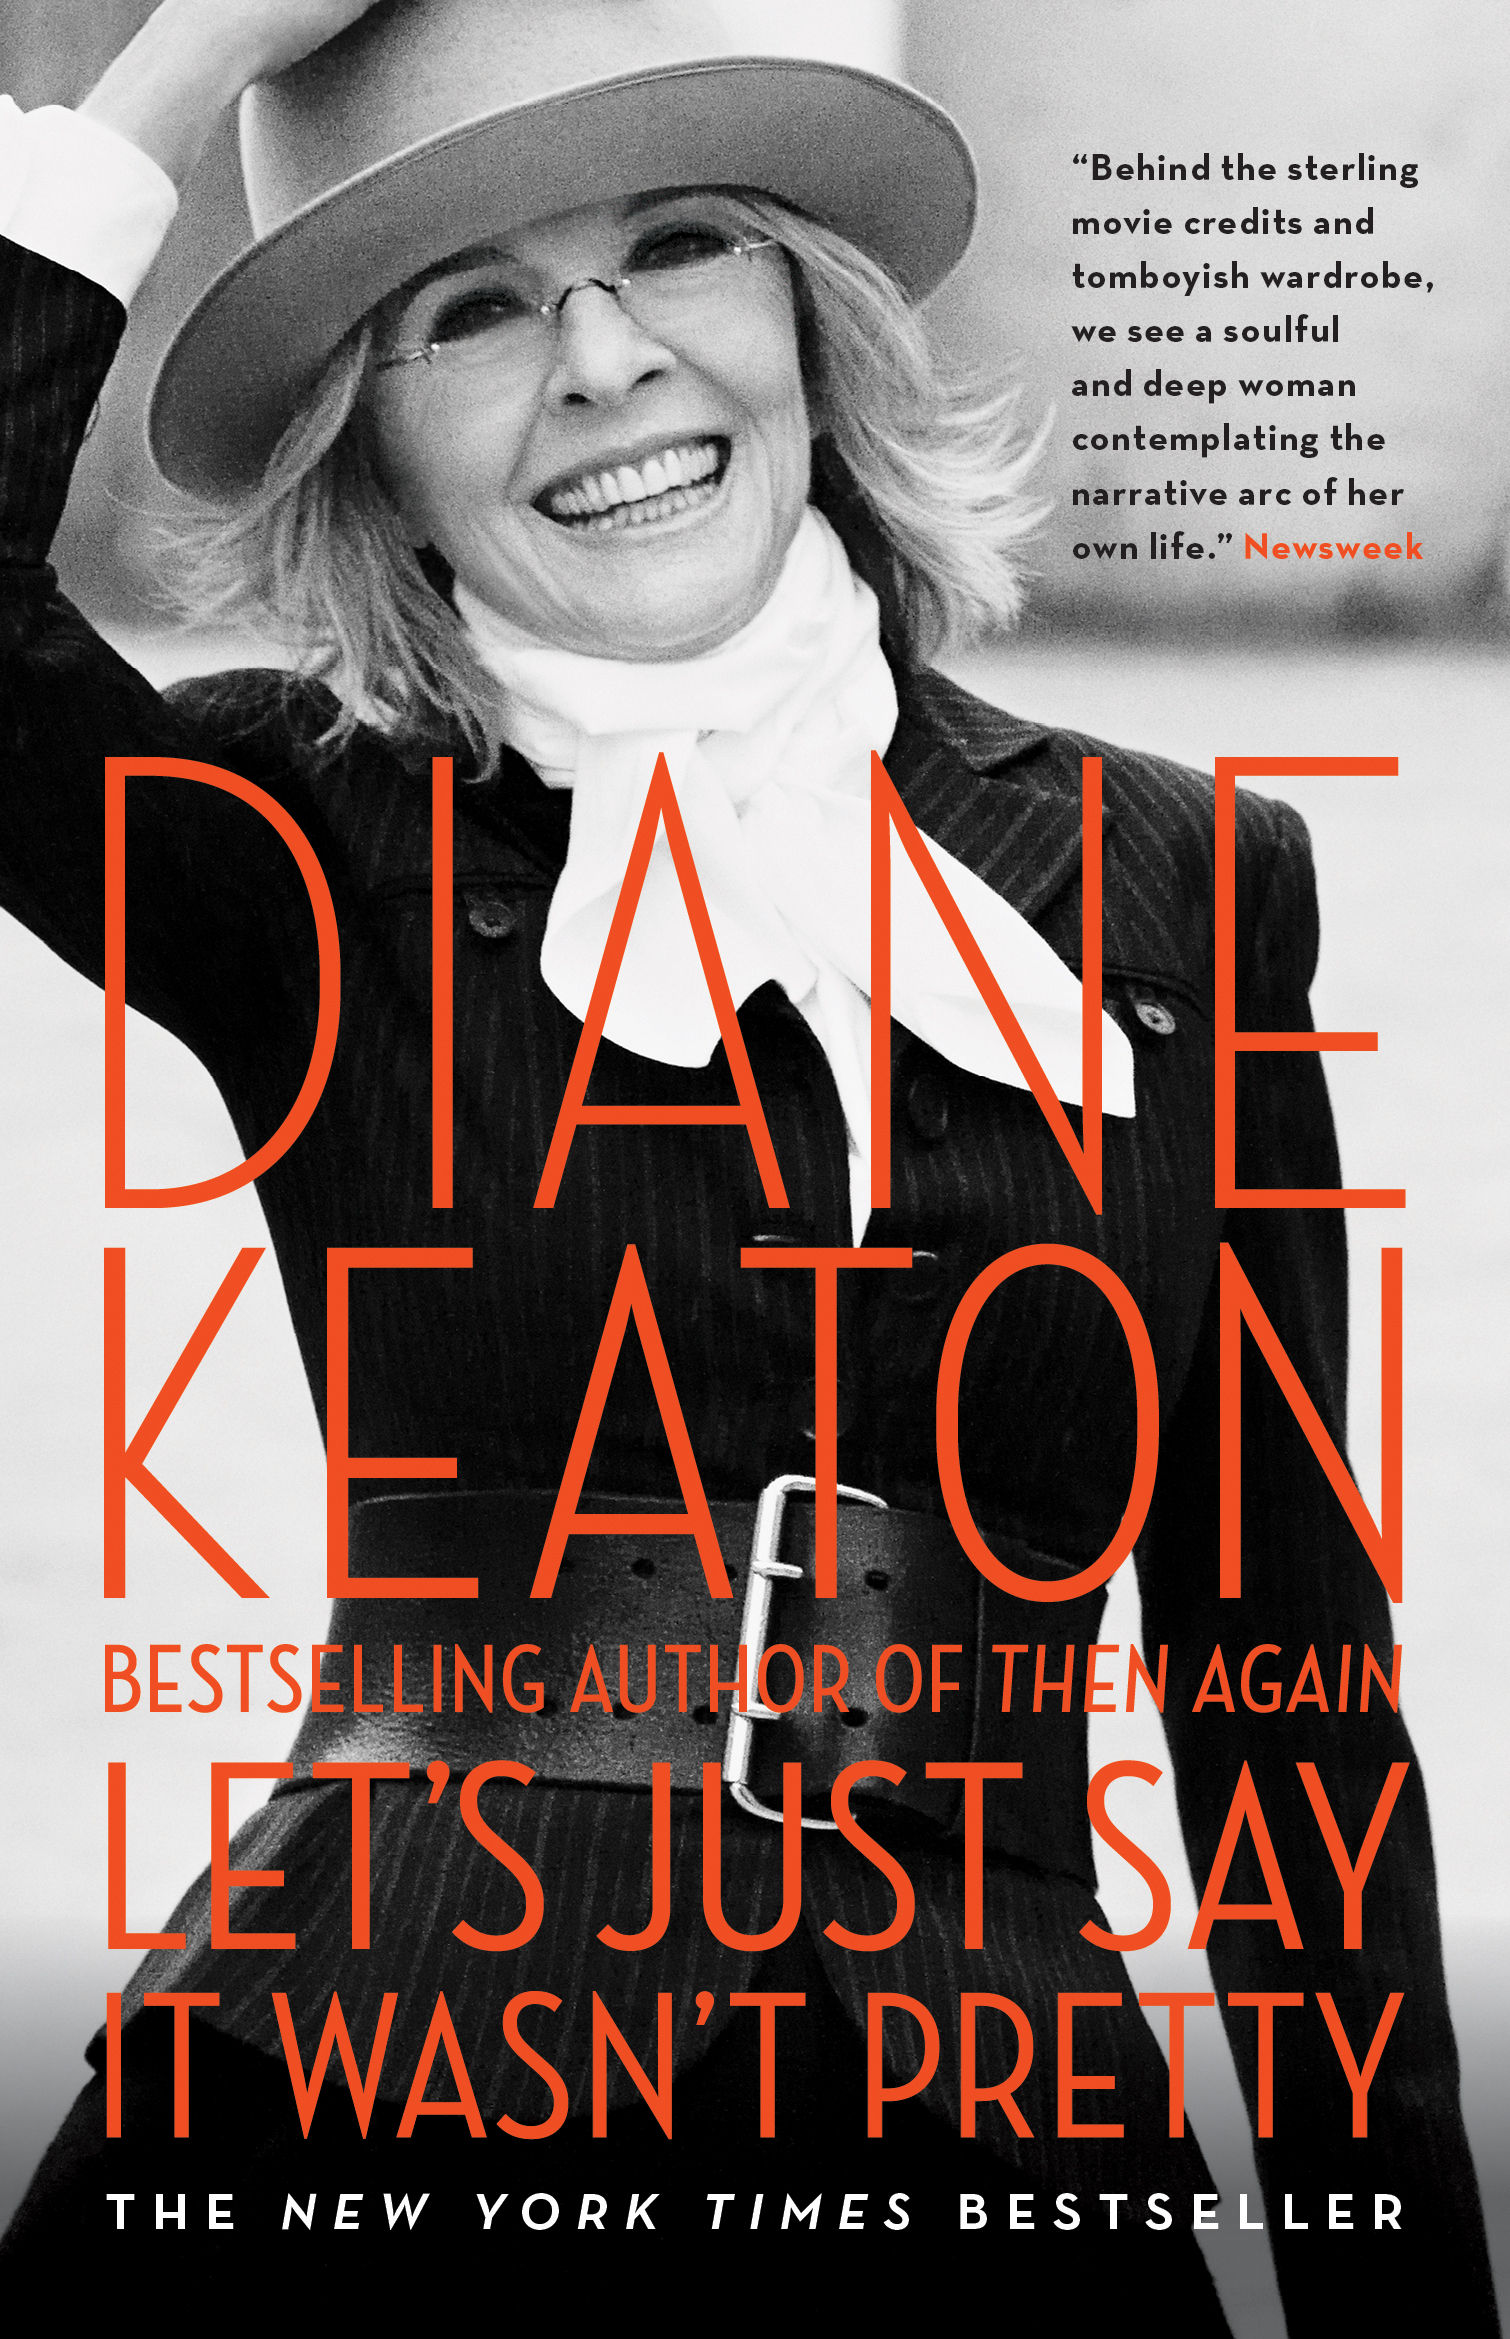 Let's Just Say It Wasn't Pretty by Diane Keaton | Black Inc.